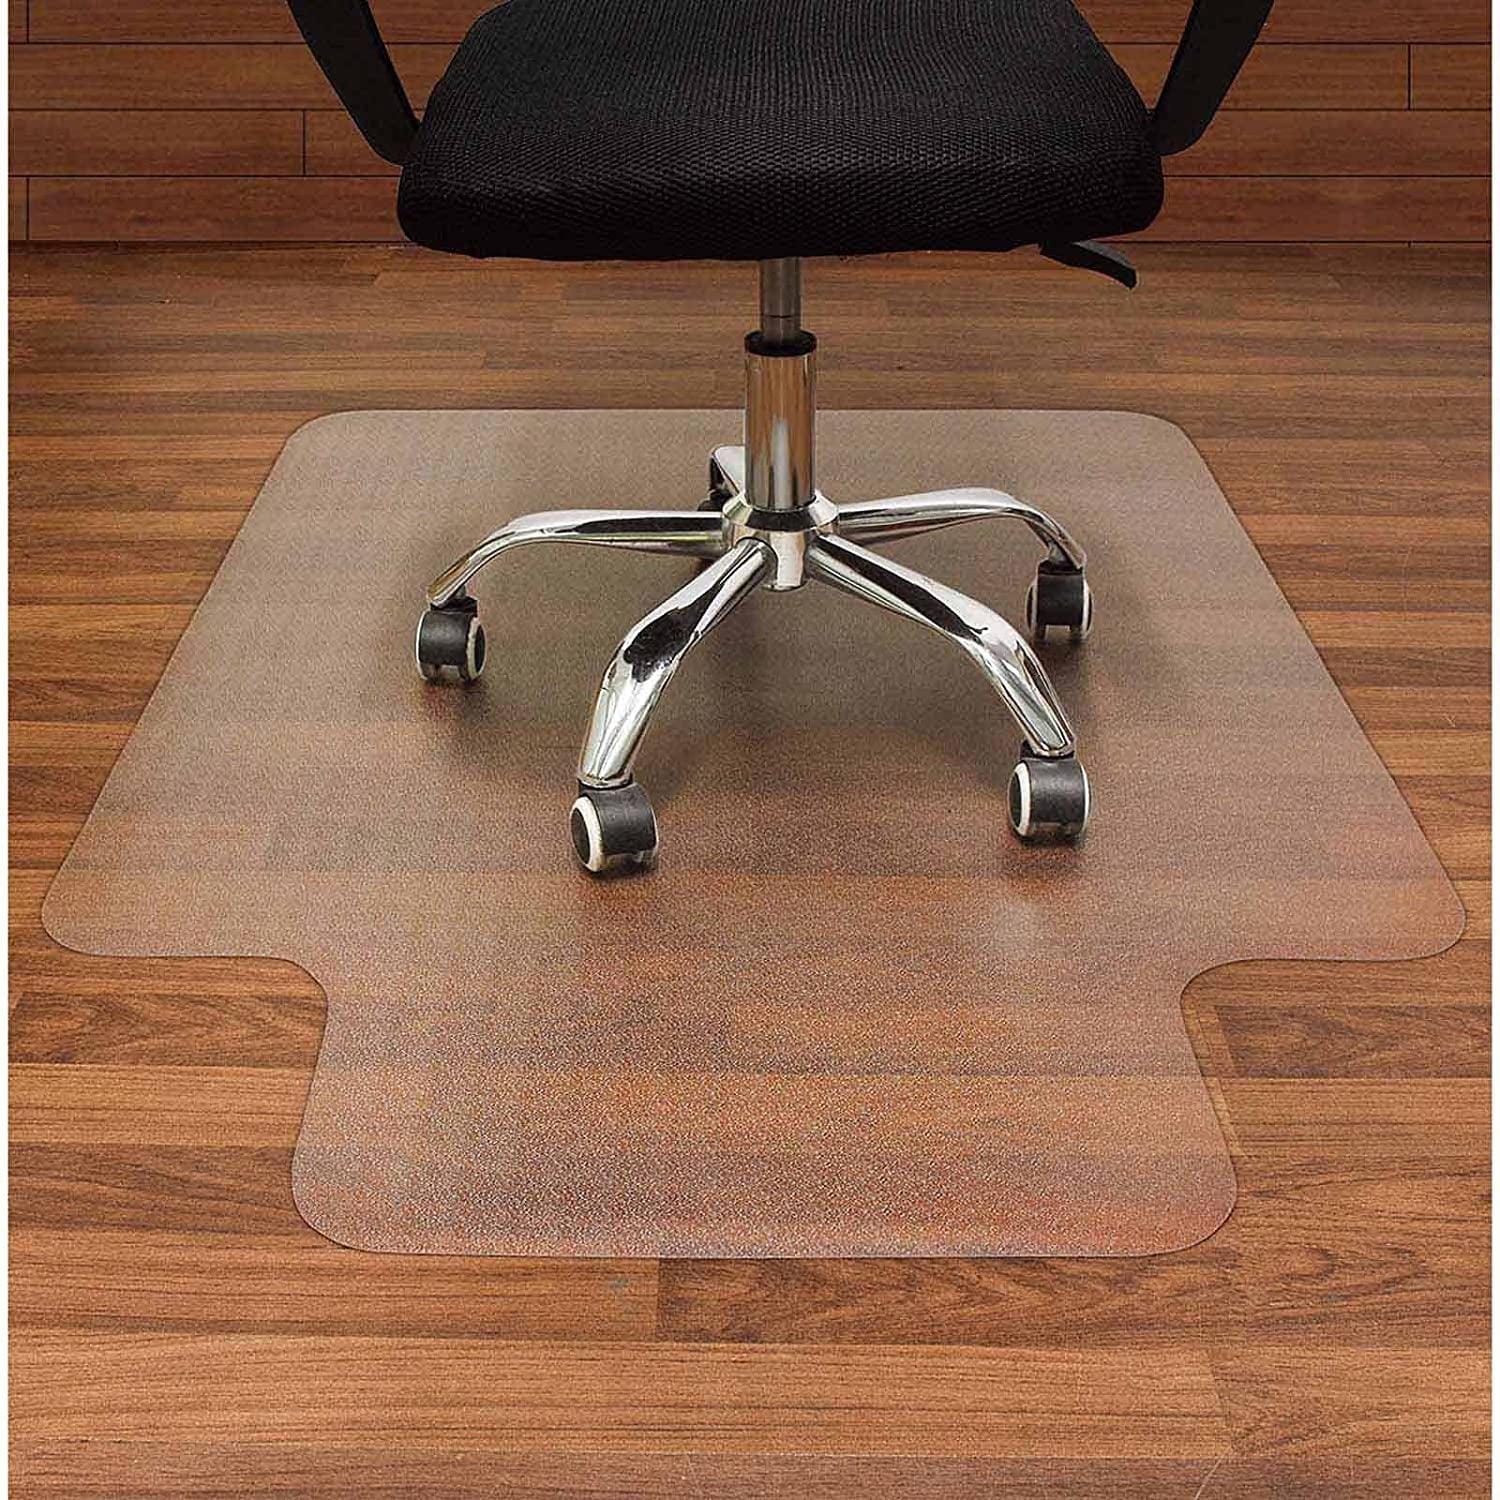 Anti-Slip Lipped Chair Mat Hard Wood Floor Desk Carpet Tiles Laminate Protector 